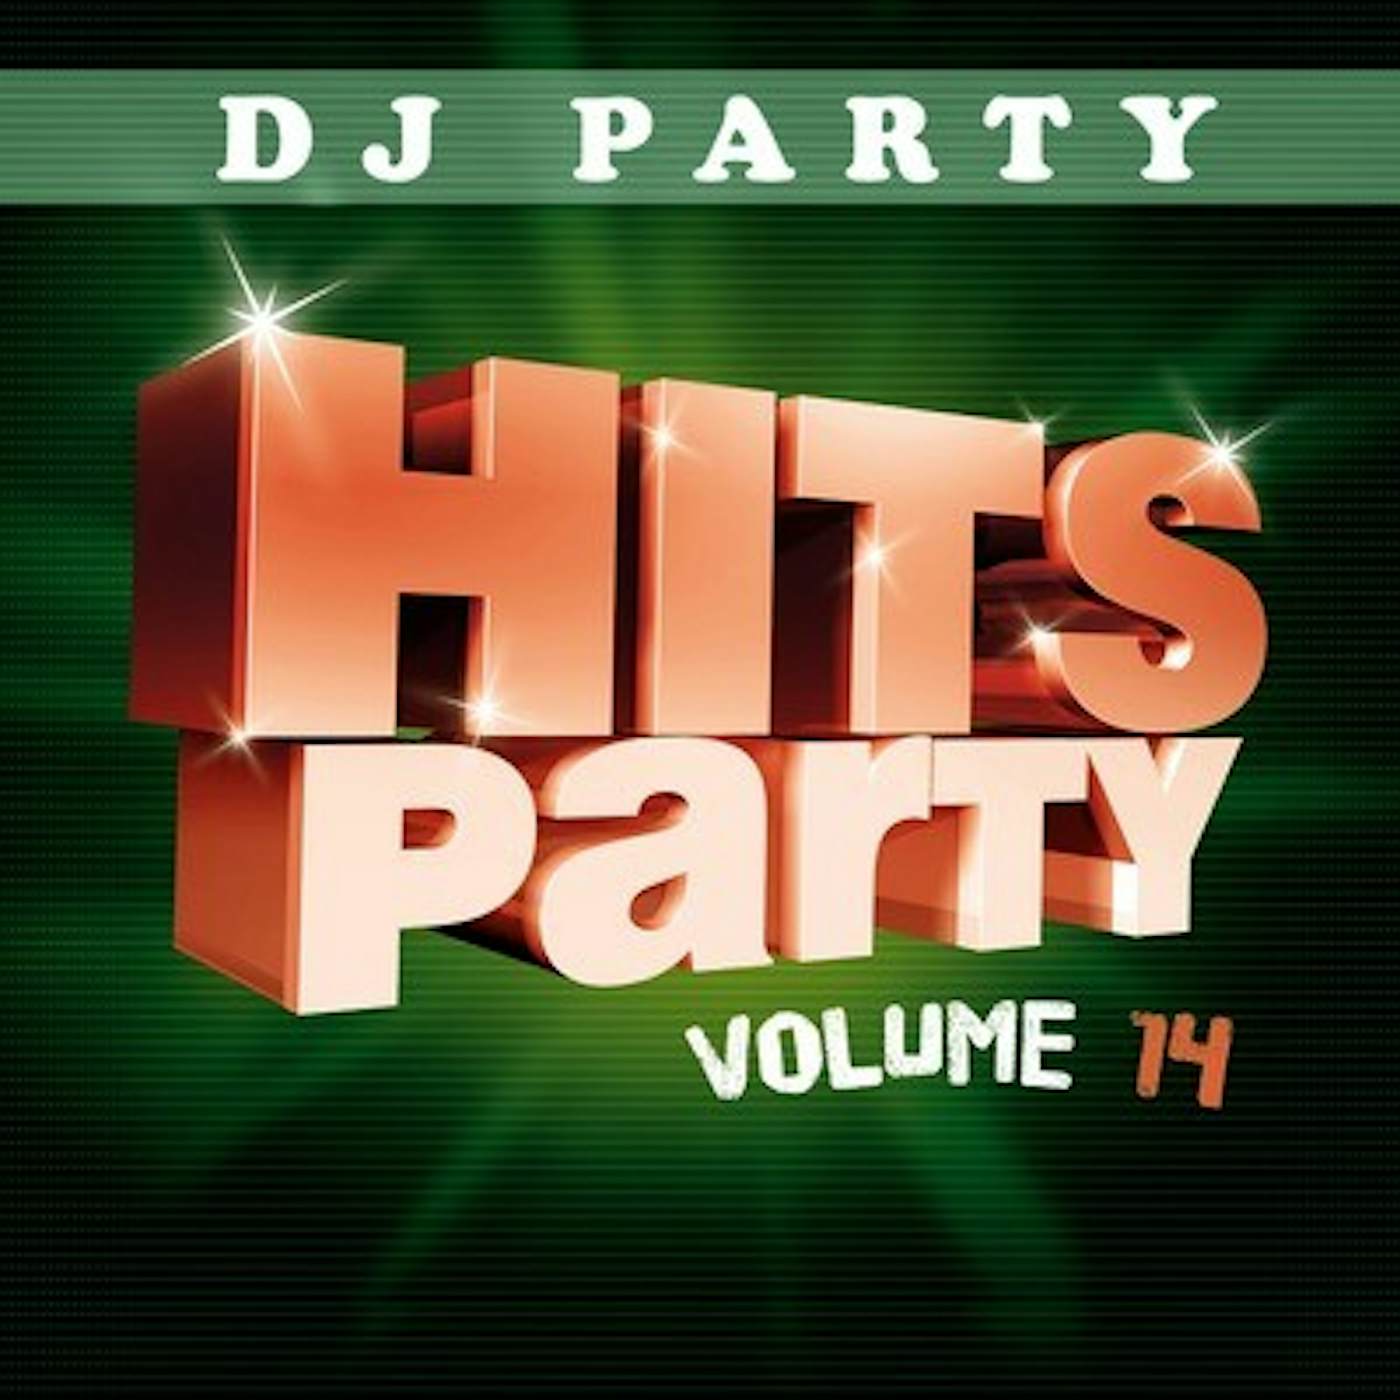 DJ Party HITS PARTY VOL. 14 CD